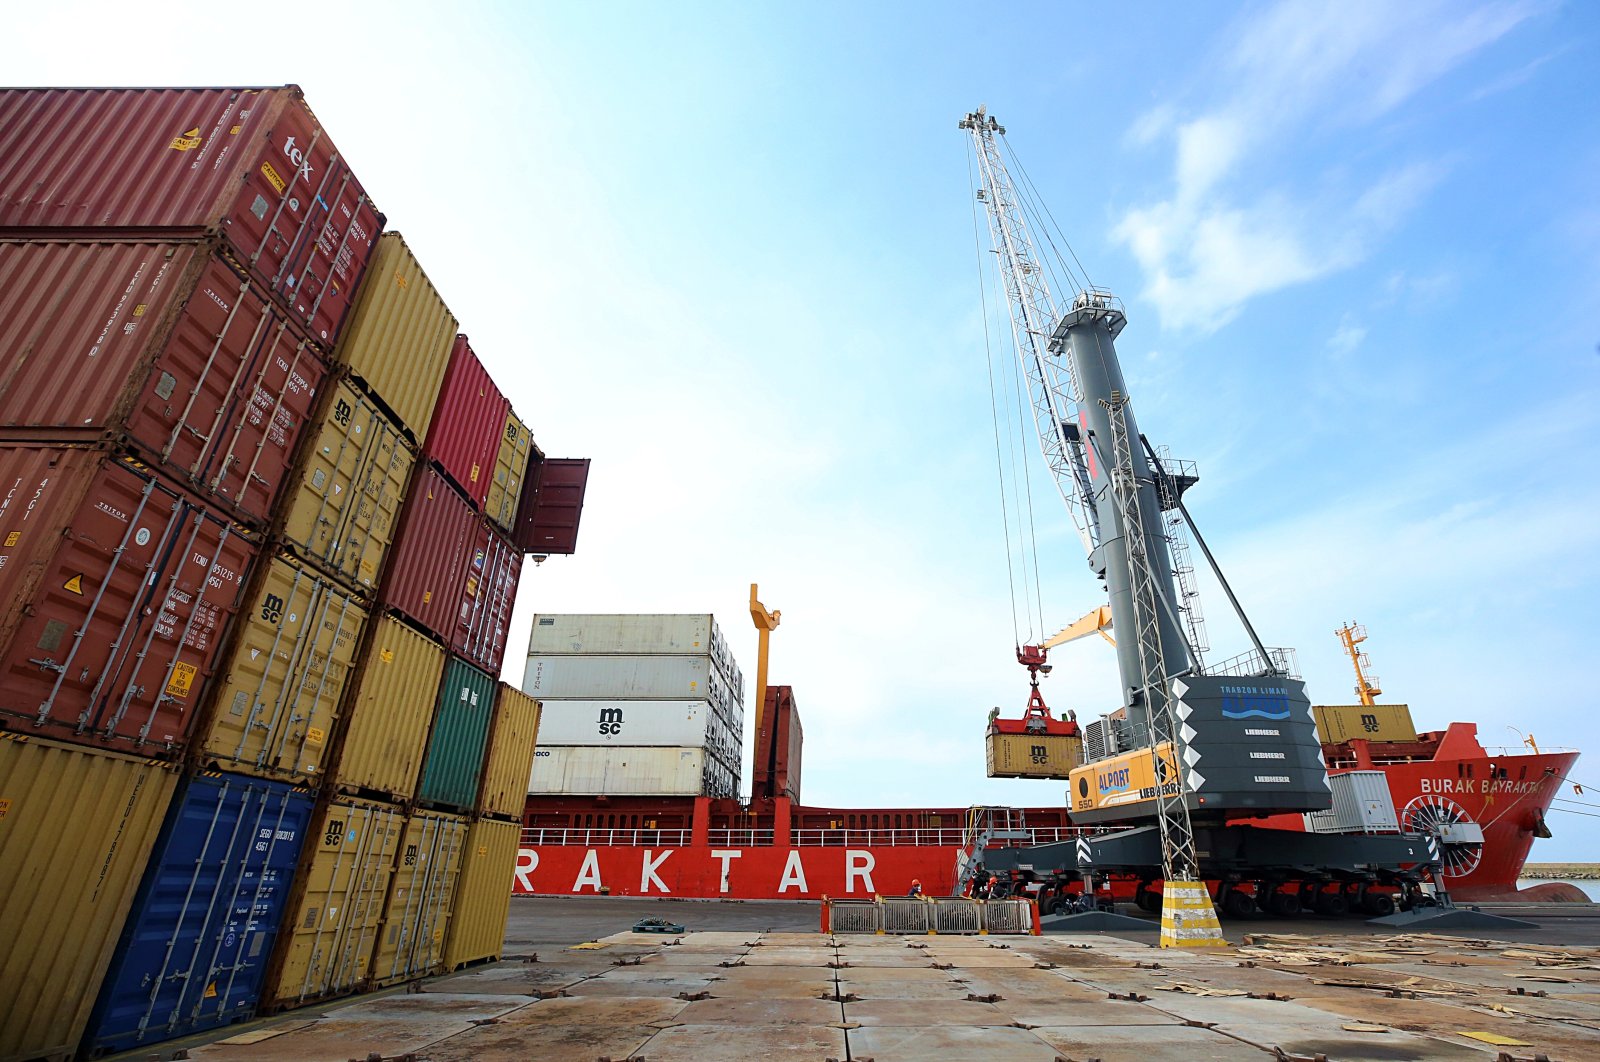 Türkiye’s foreign trade gap nearly halves amid upward export trend